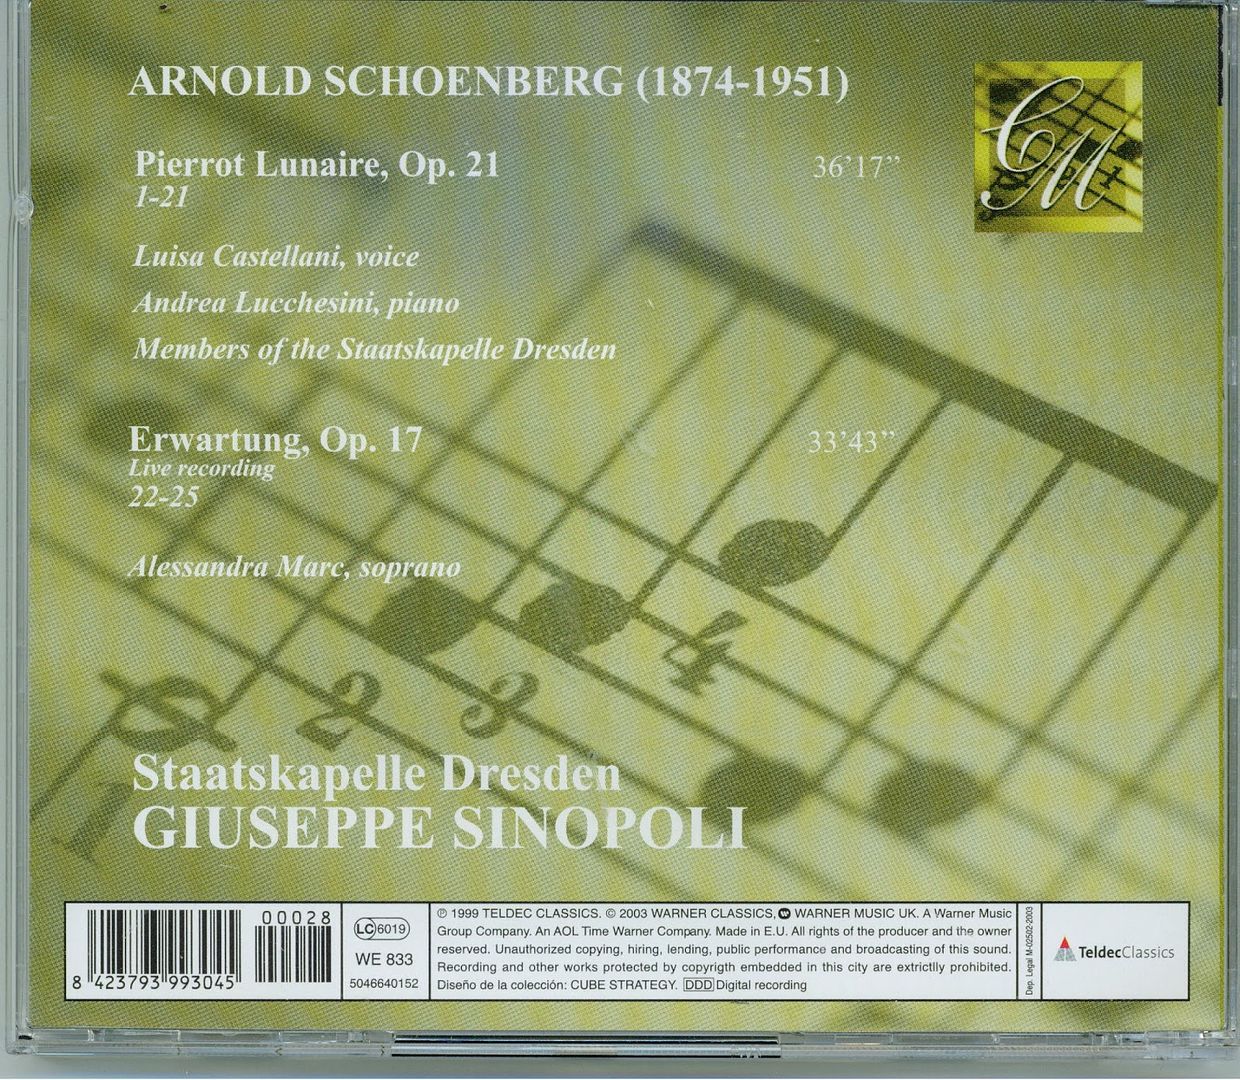 muy 1938 - Giuseppe Sinopoli - La mejor musica del mundo